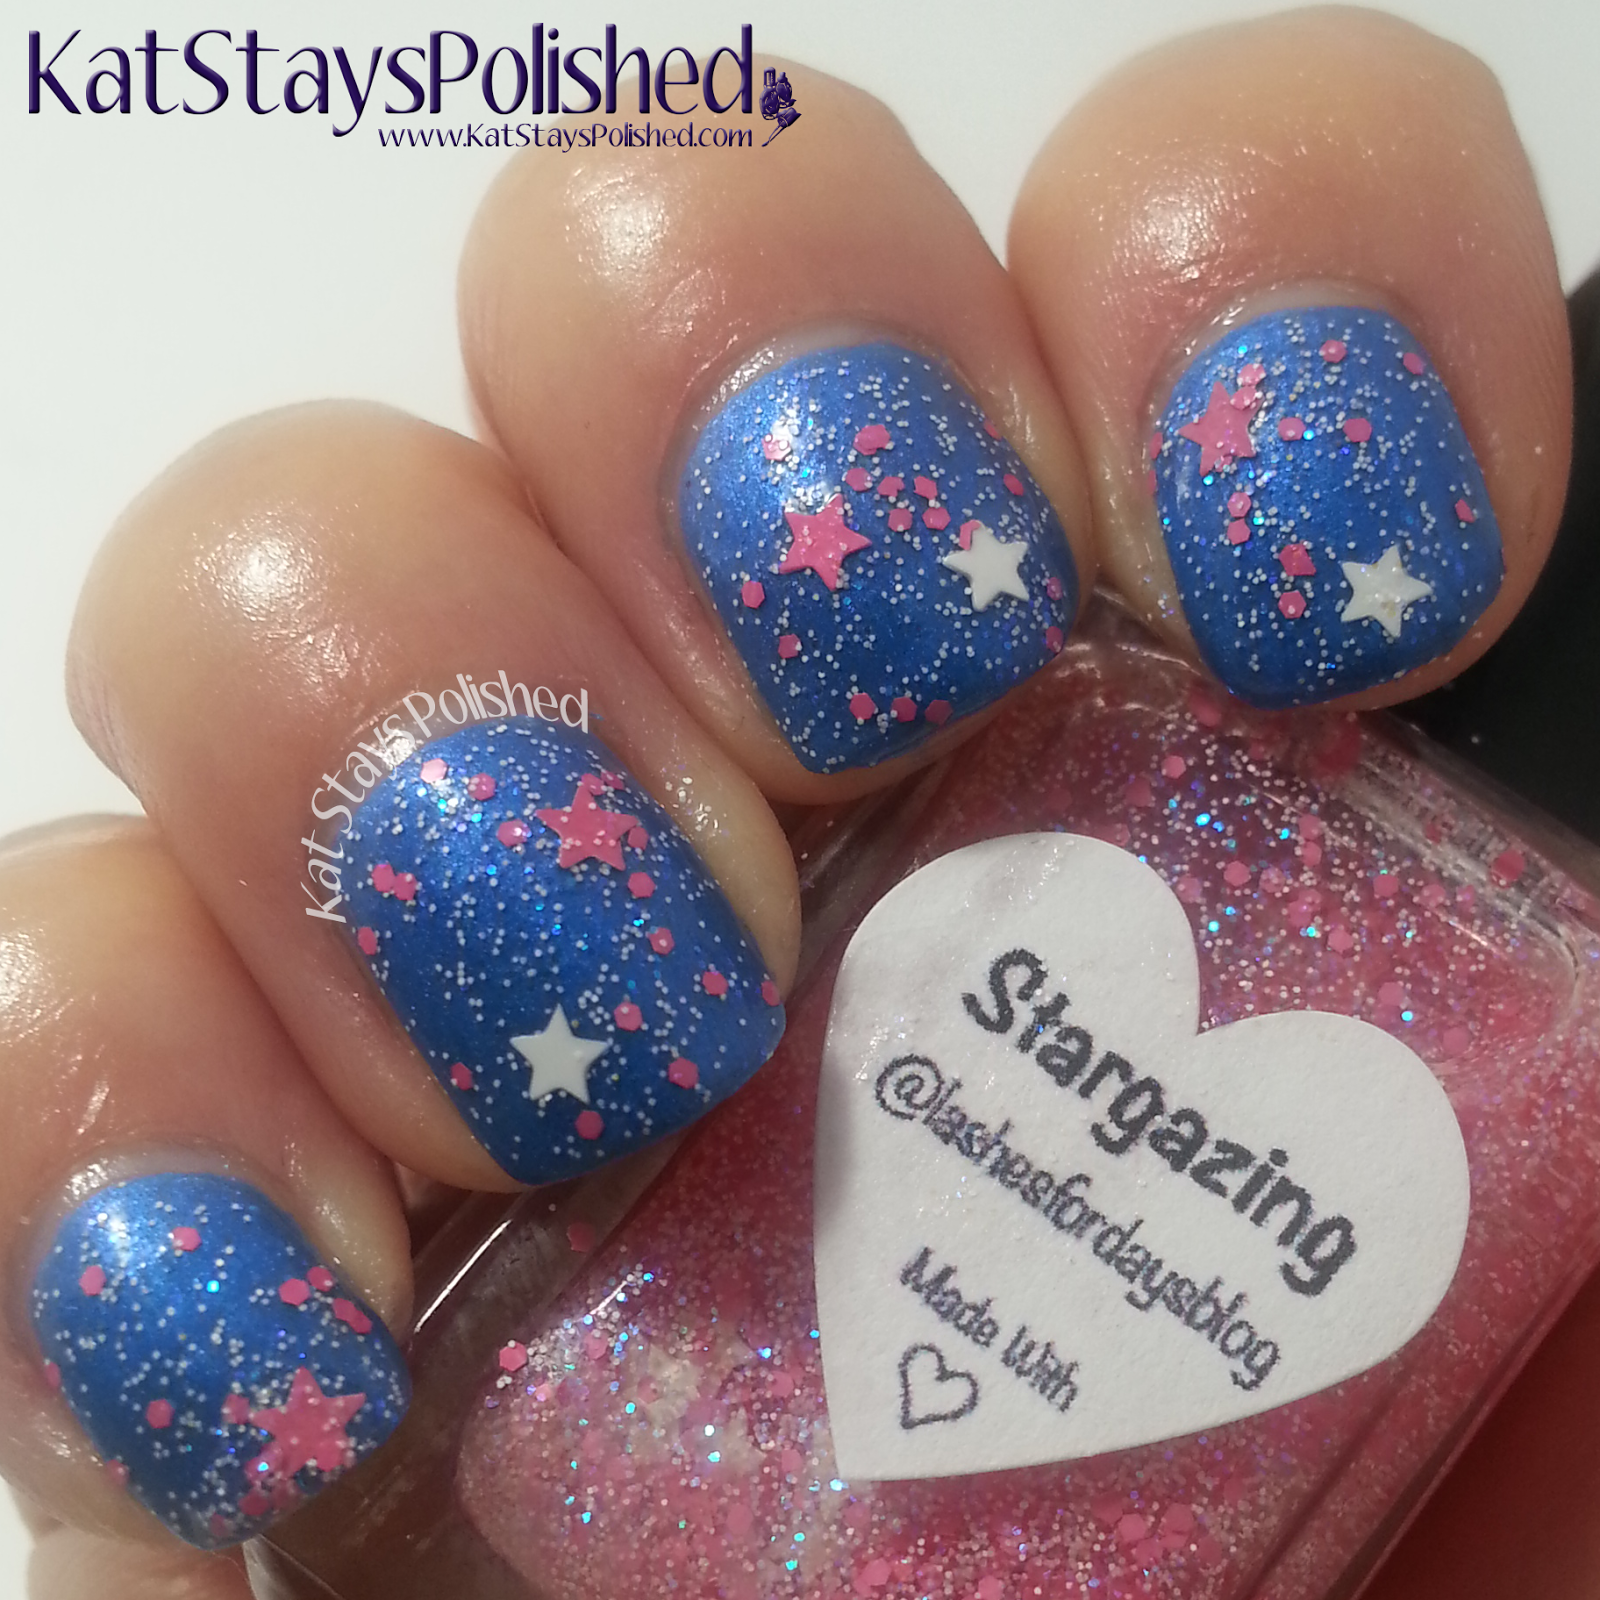 Polished for For Days - Gloss48 - Stargazing | Kat Stays Polished